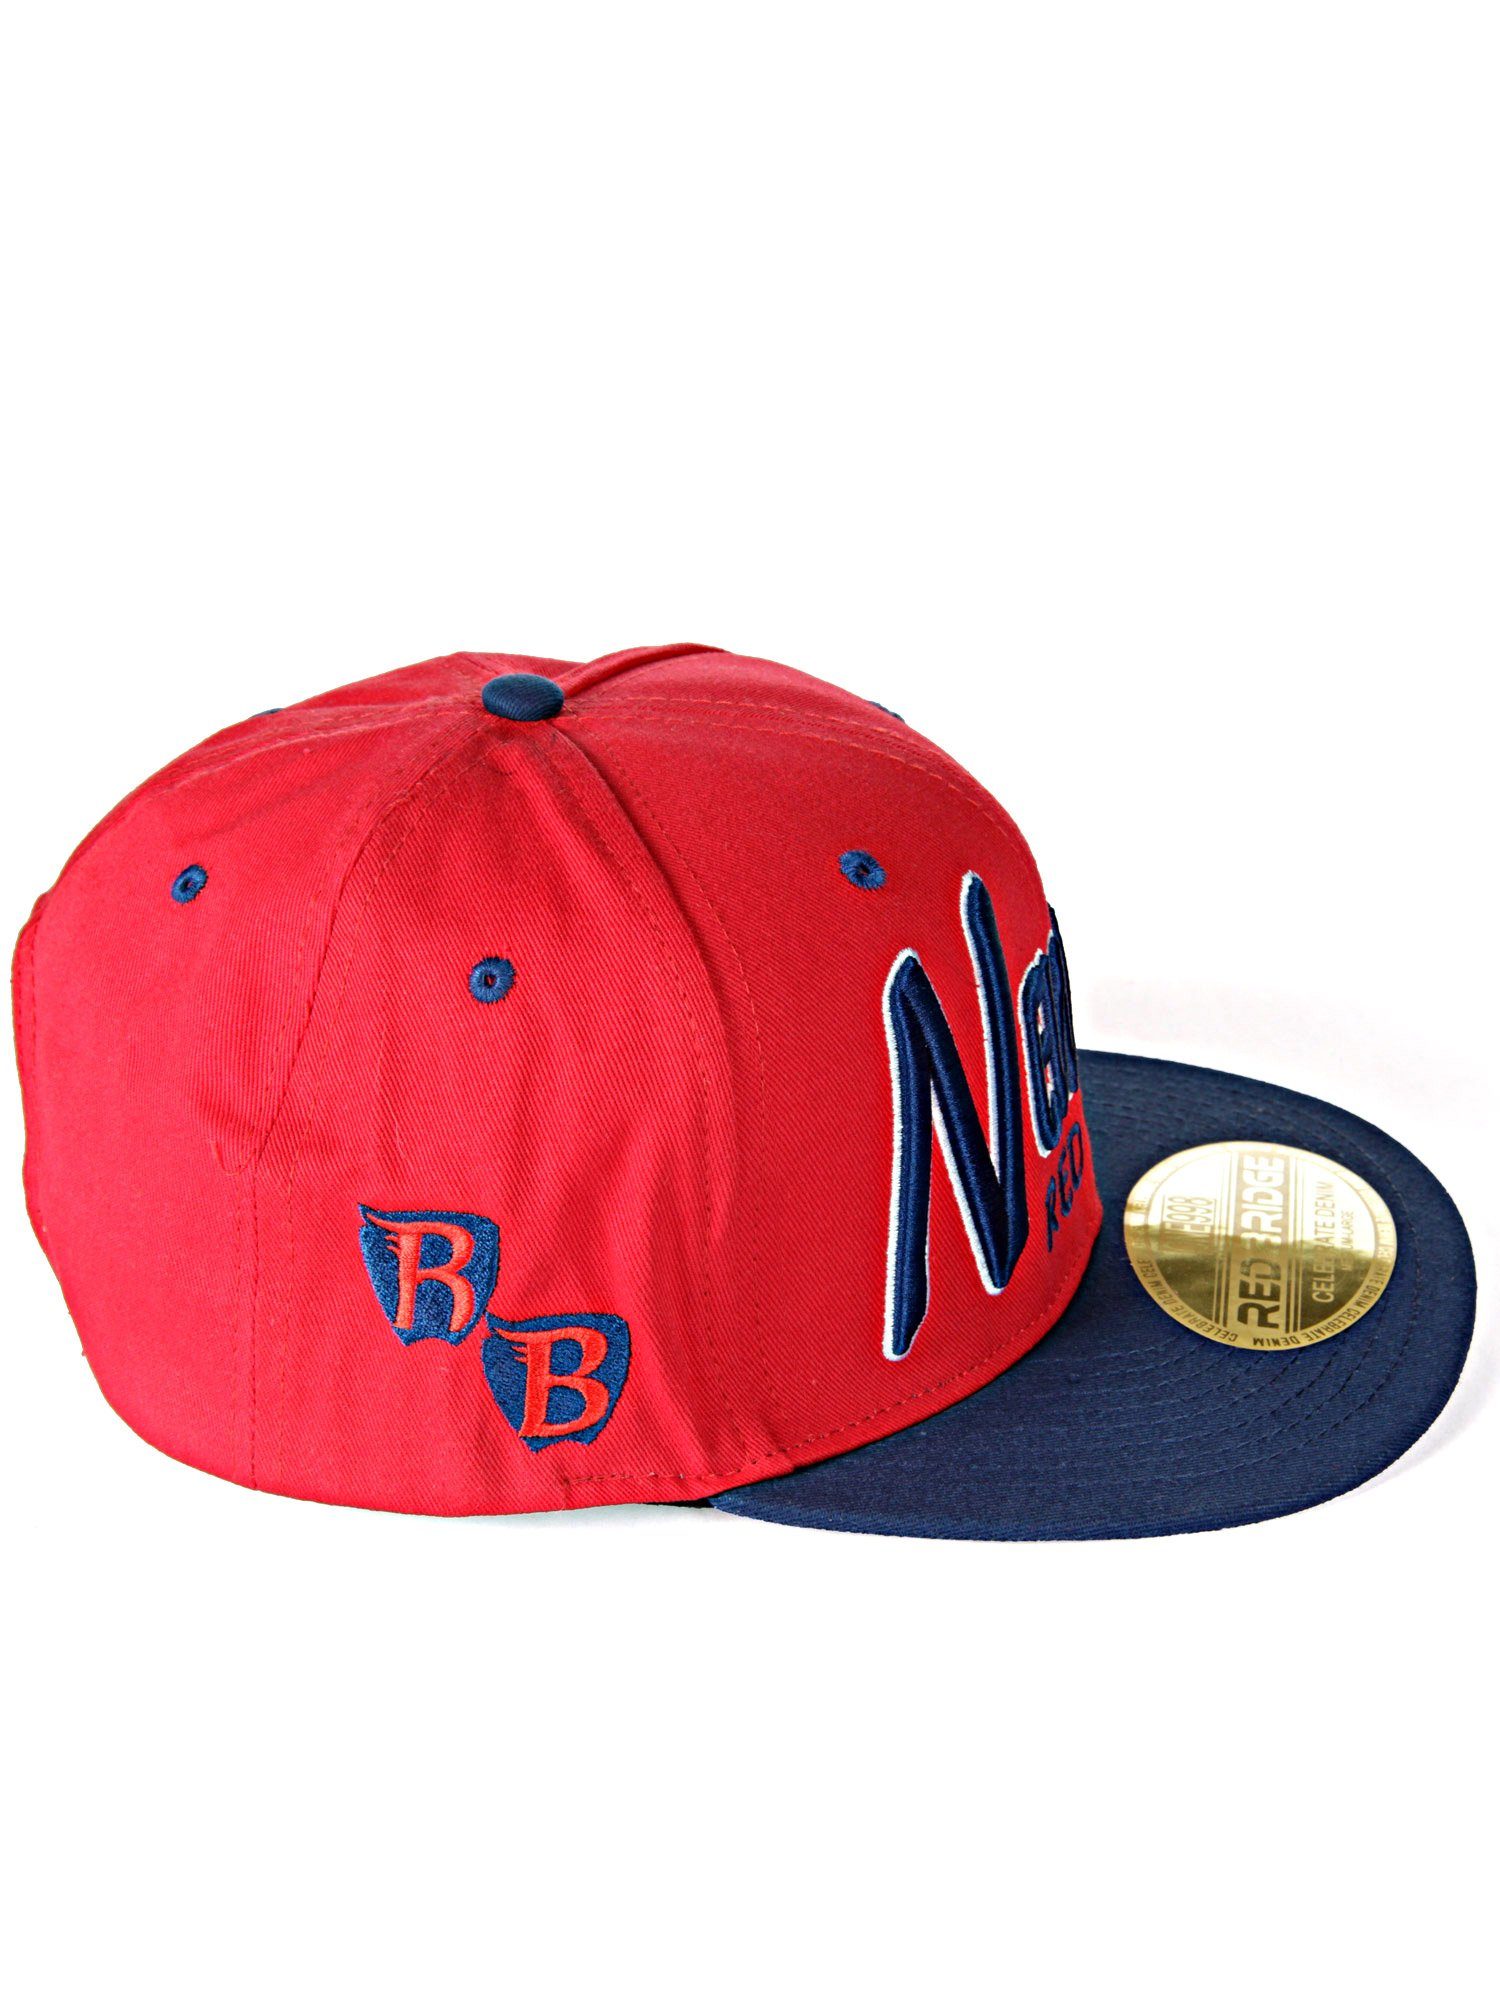 RedBridge Baseball kontrastfarbigem dunkelblau-rot Schirm mit Bootle Cap